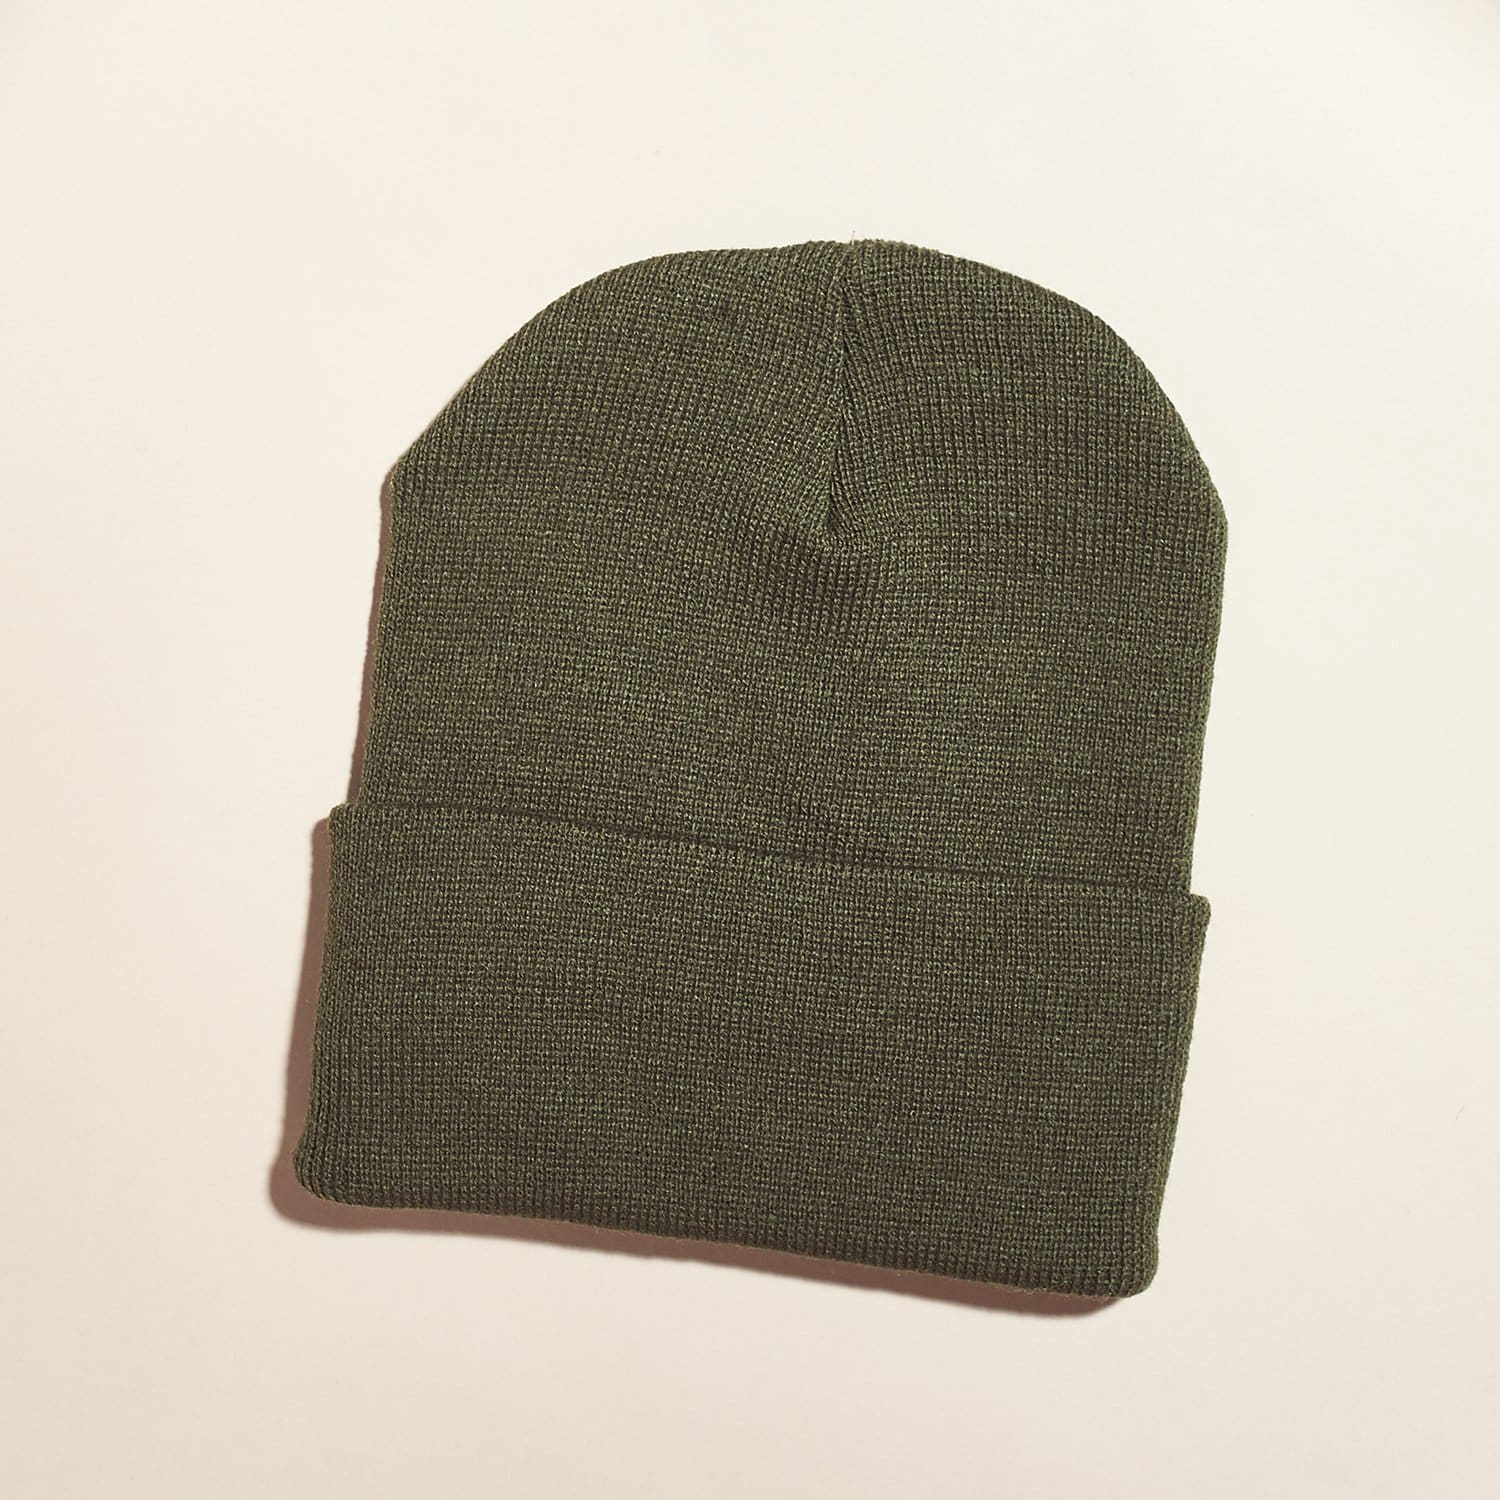 Army Green Beanie Basic Beanie - Basics - Green - Hat